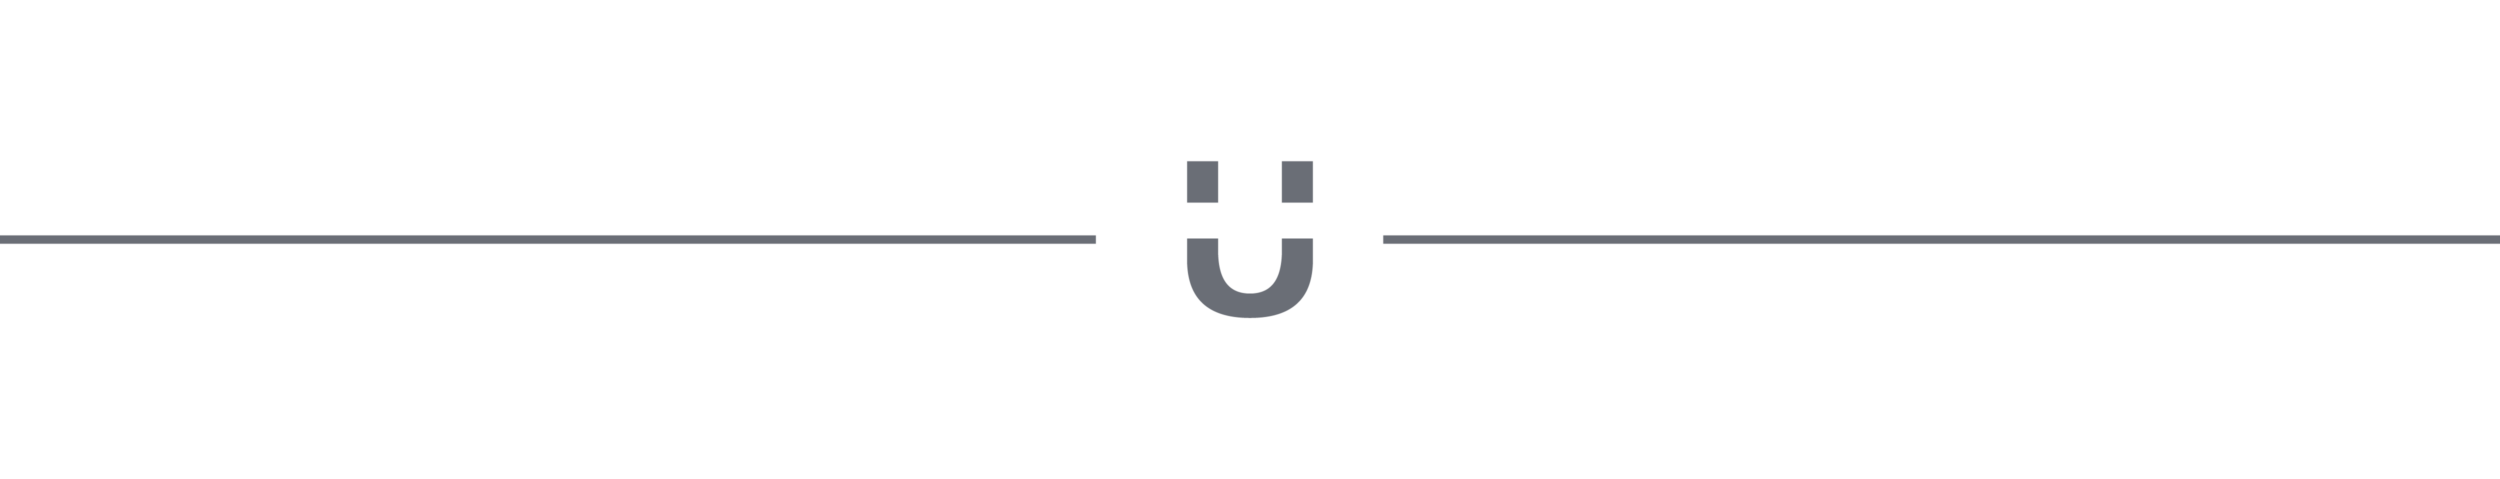 Steinbüchel logo ü Trenner